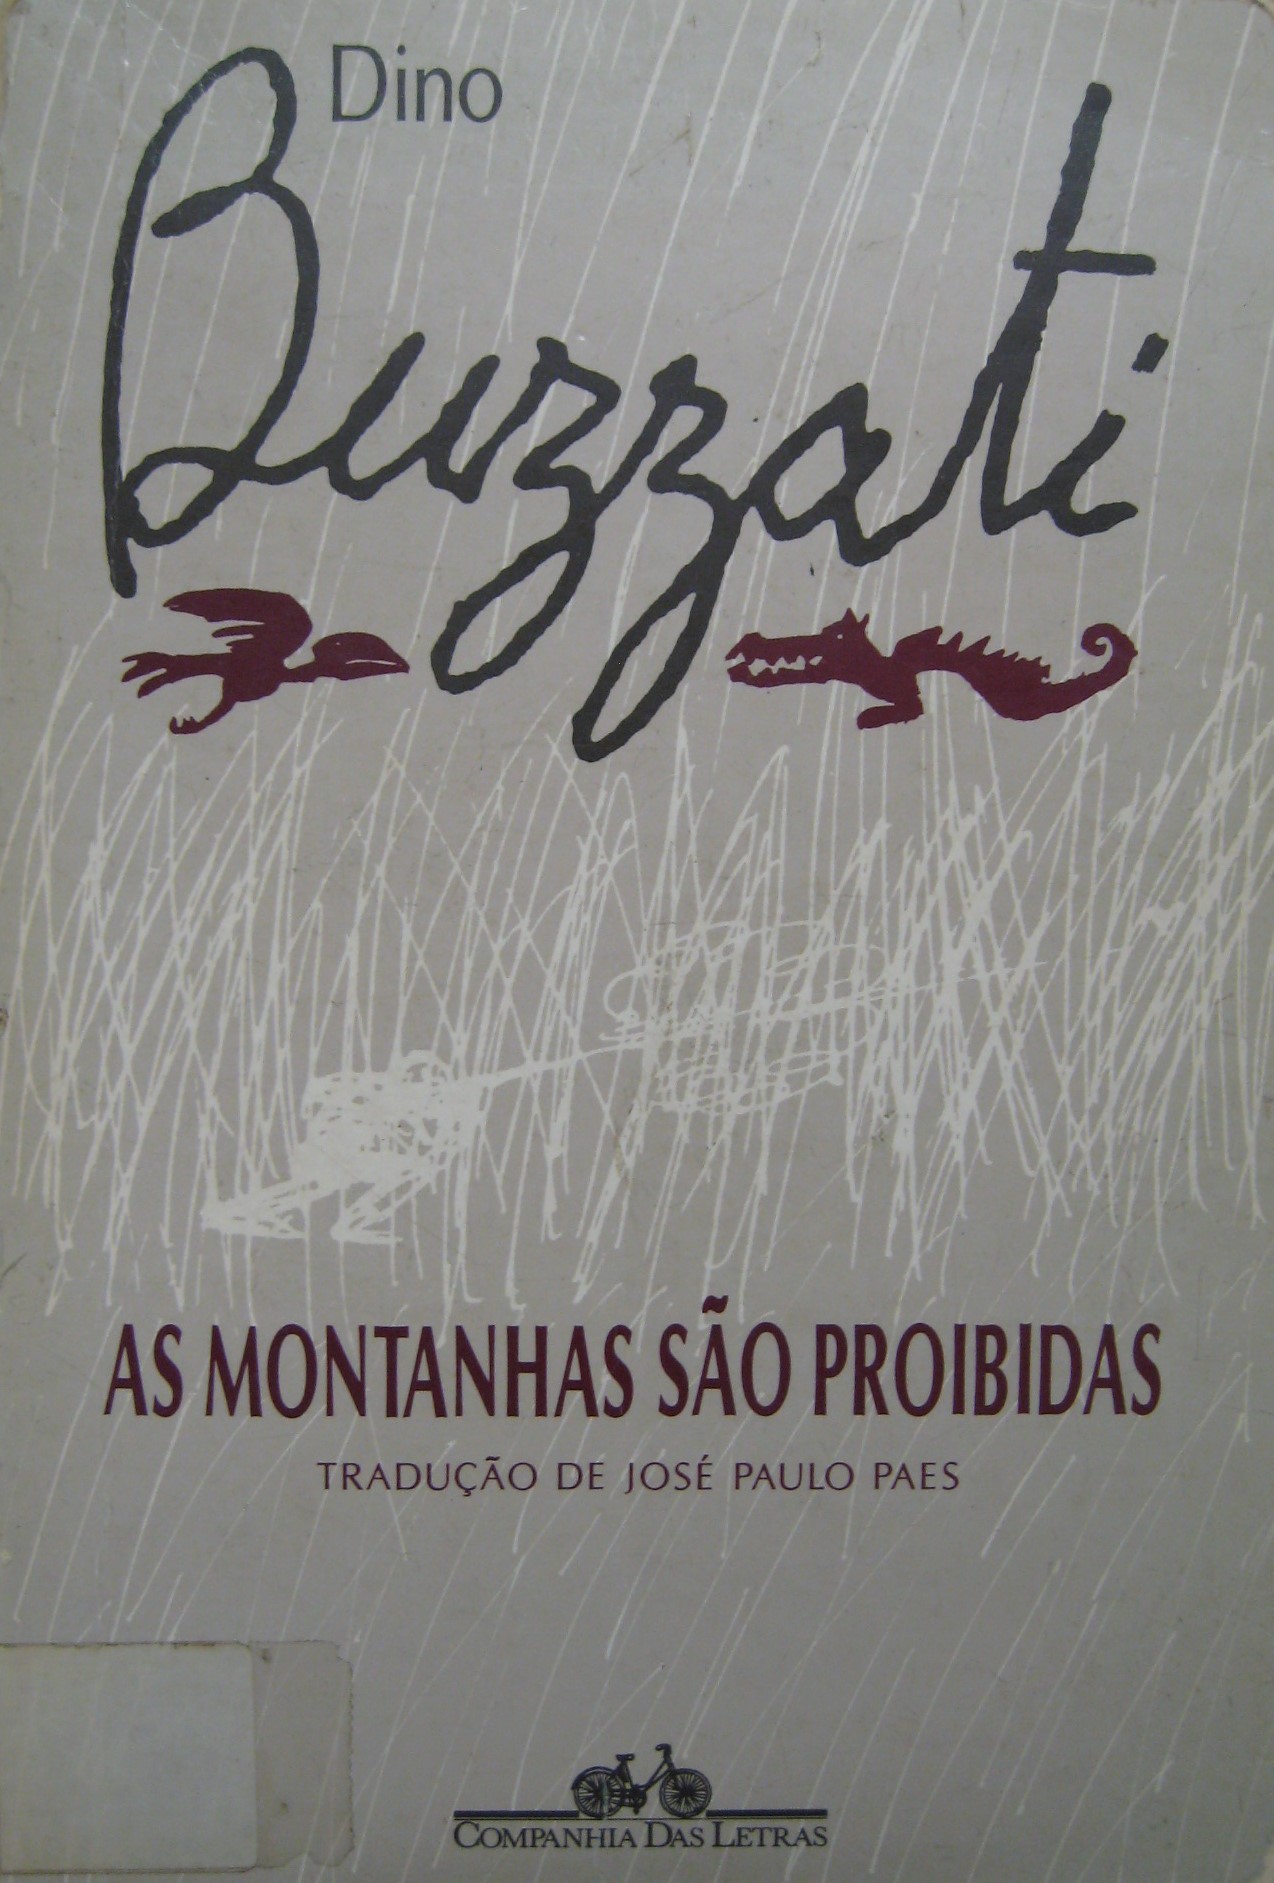 https://www.literaturabrasileira.ufsc.br/_images/obras/as_momtanhas_sao_proibidas.jpg